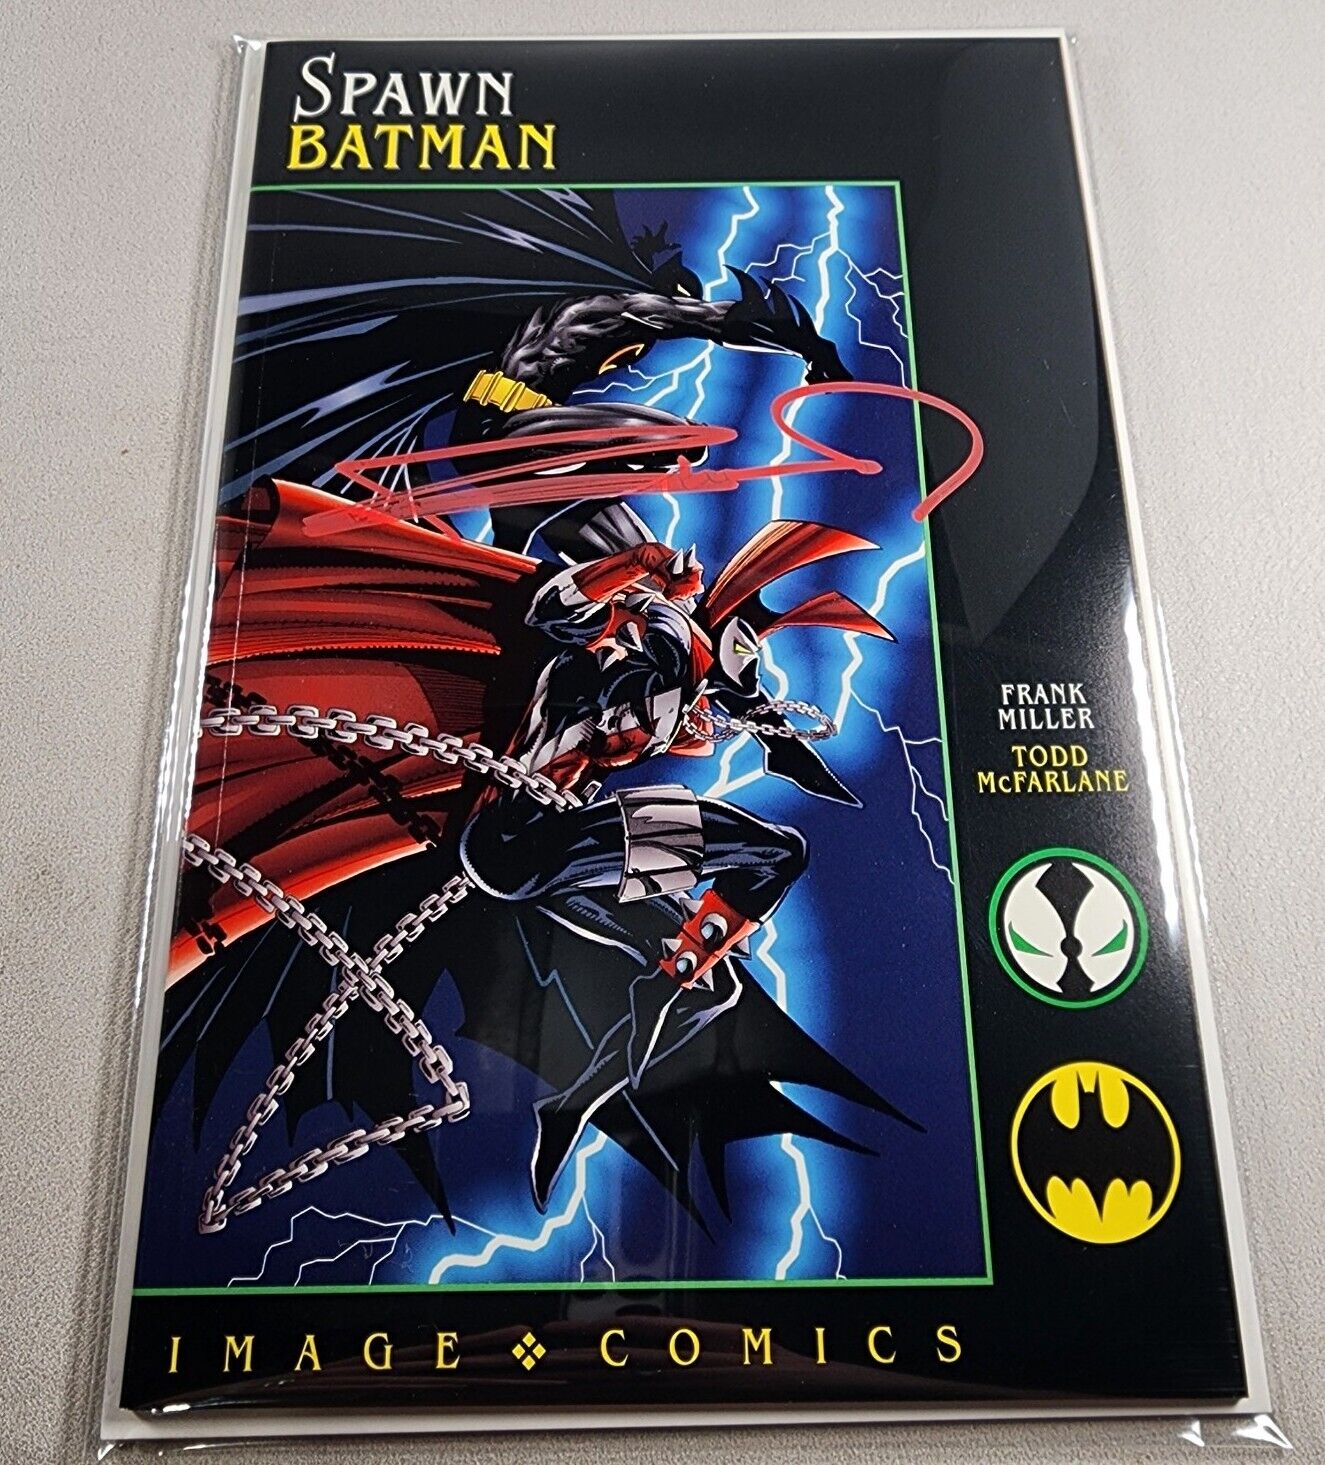 Spawn Batman #1 Image Comics 1994 Todd McFarlane Frank Miller SIGNED COA